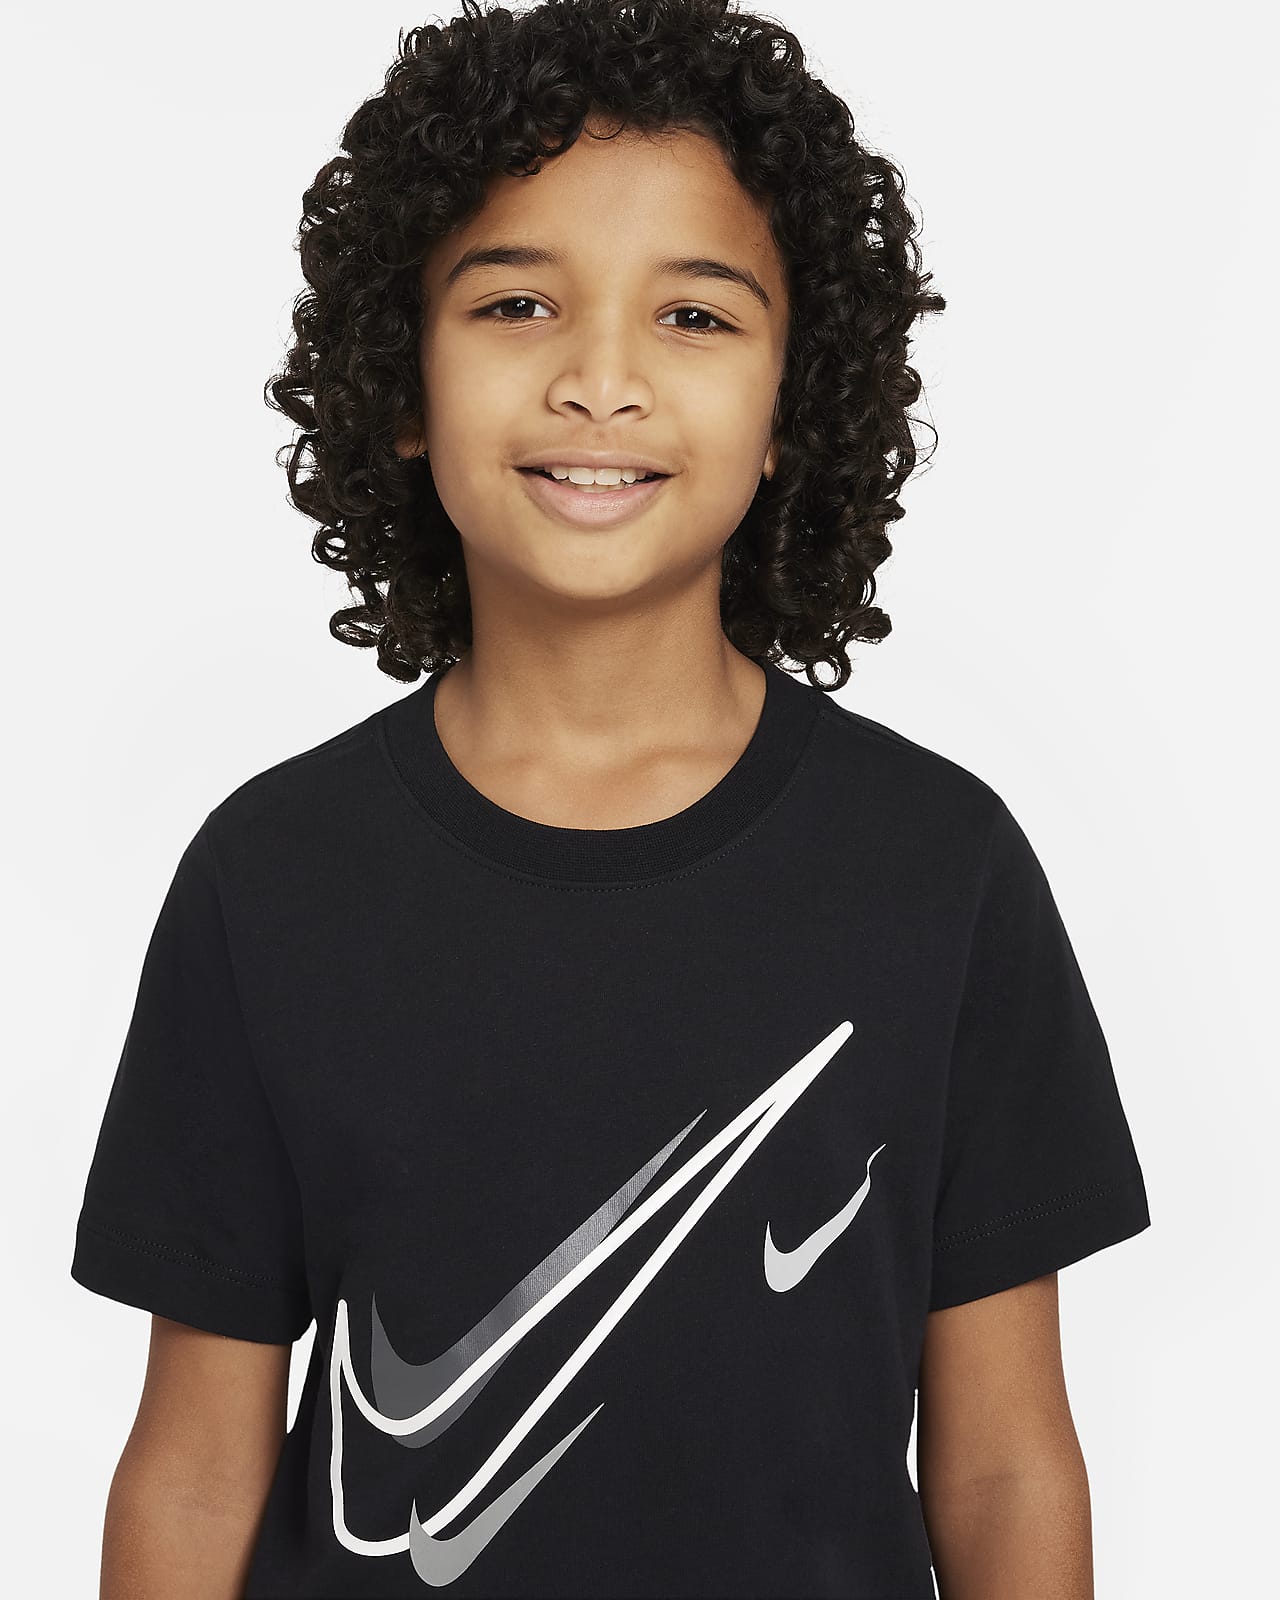 Nike Shirts For Kids | canoeracing.org.uk